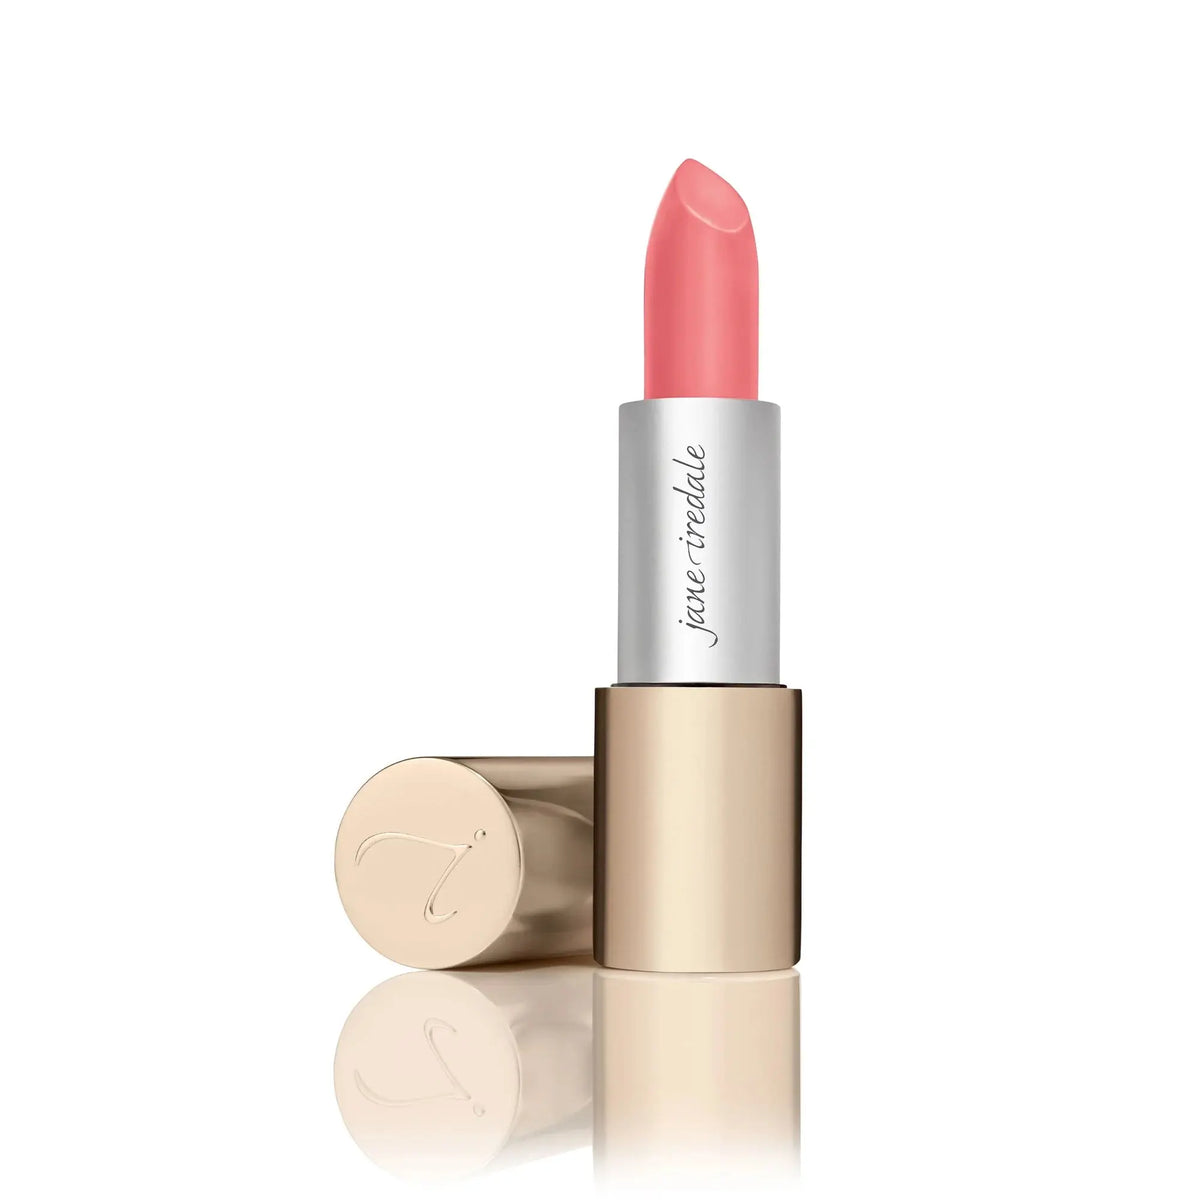 Triple Luxe Long Lasting Naturally Moist Lipstick - 